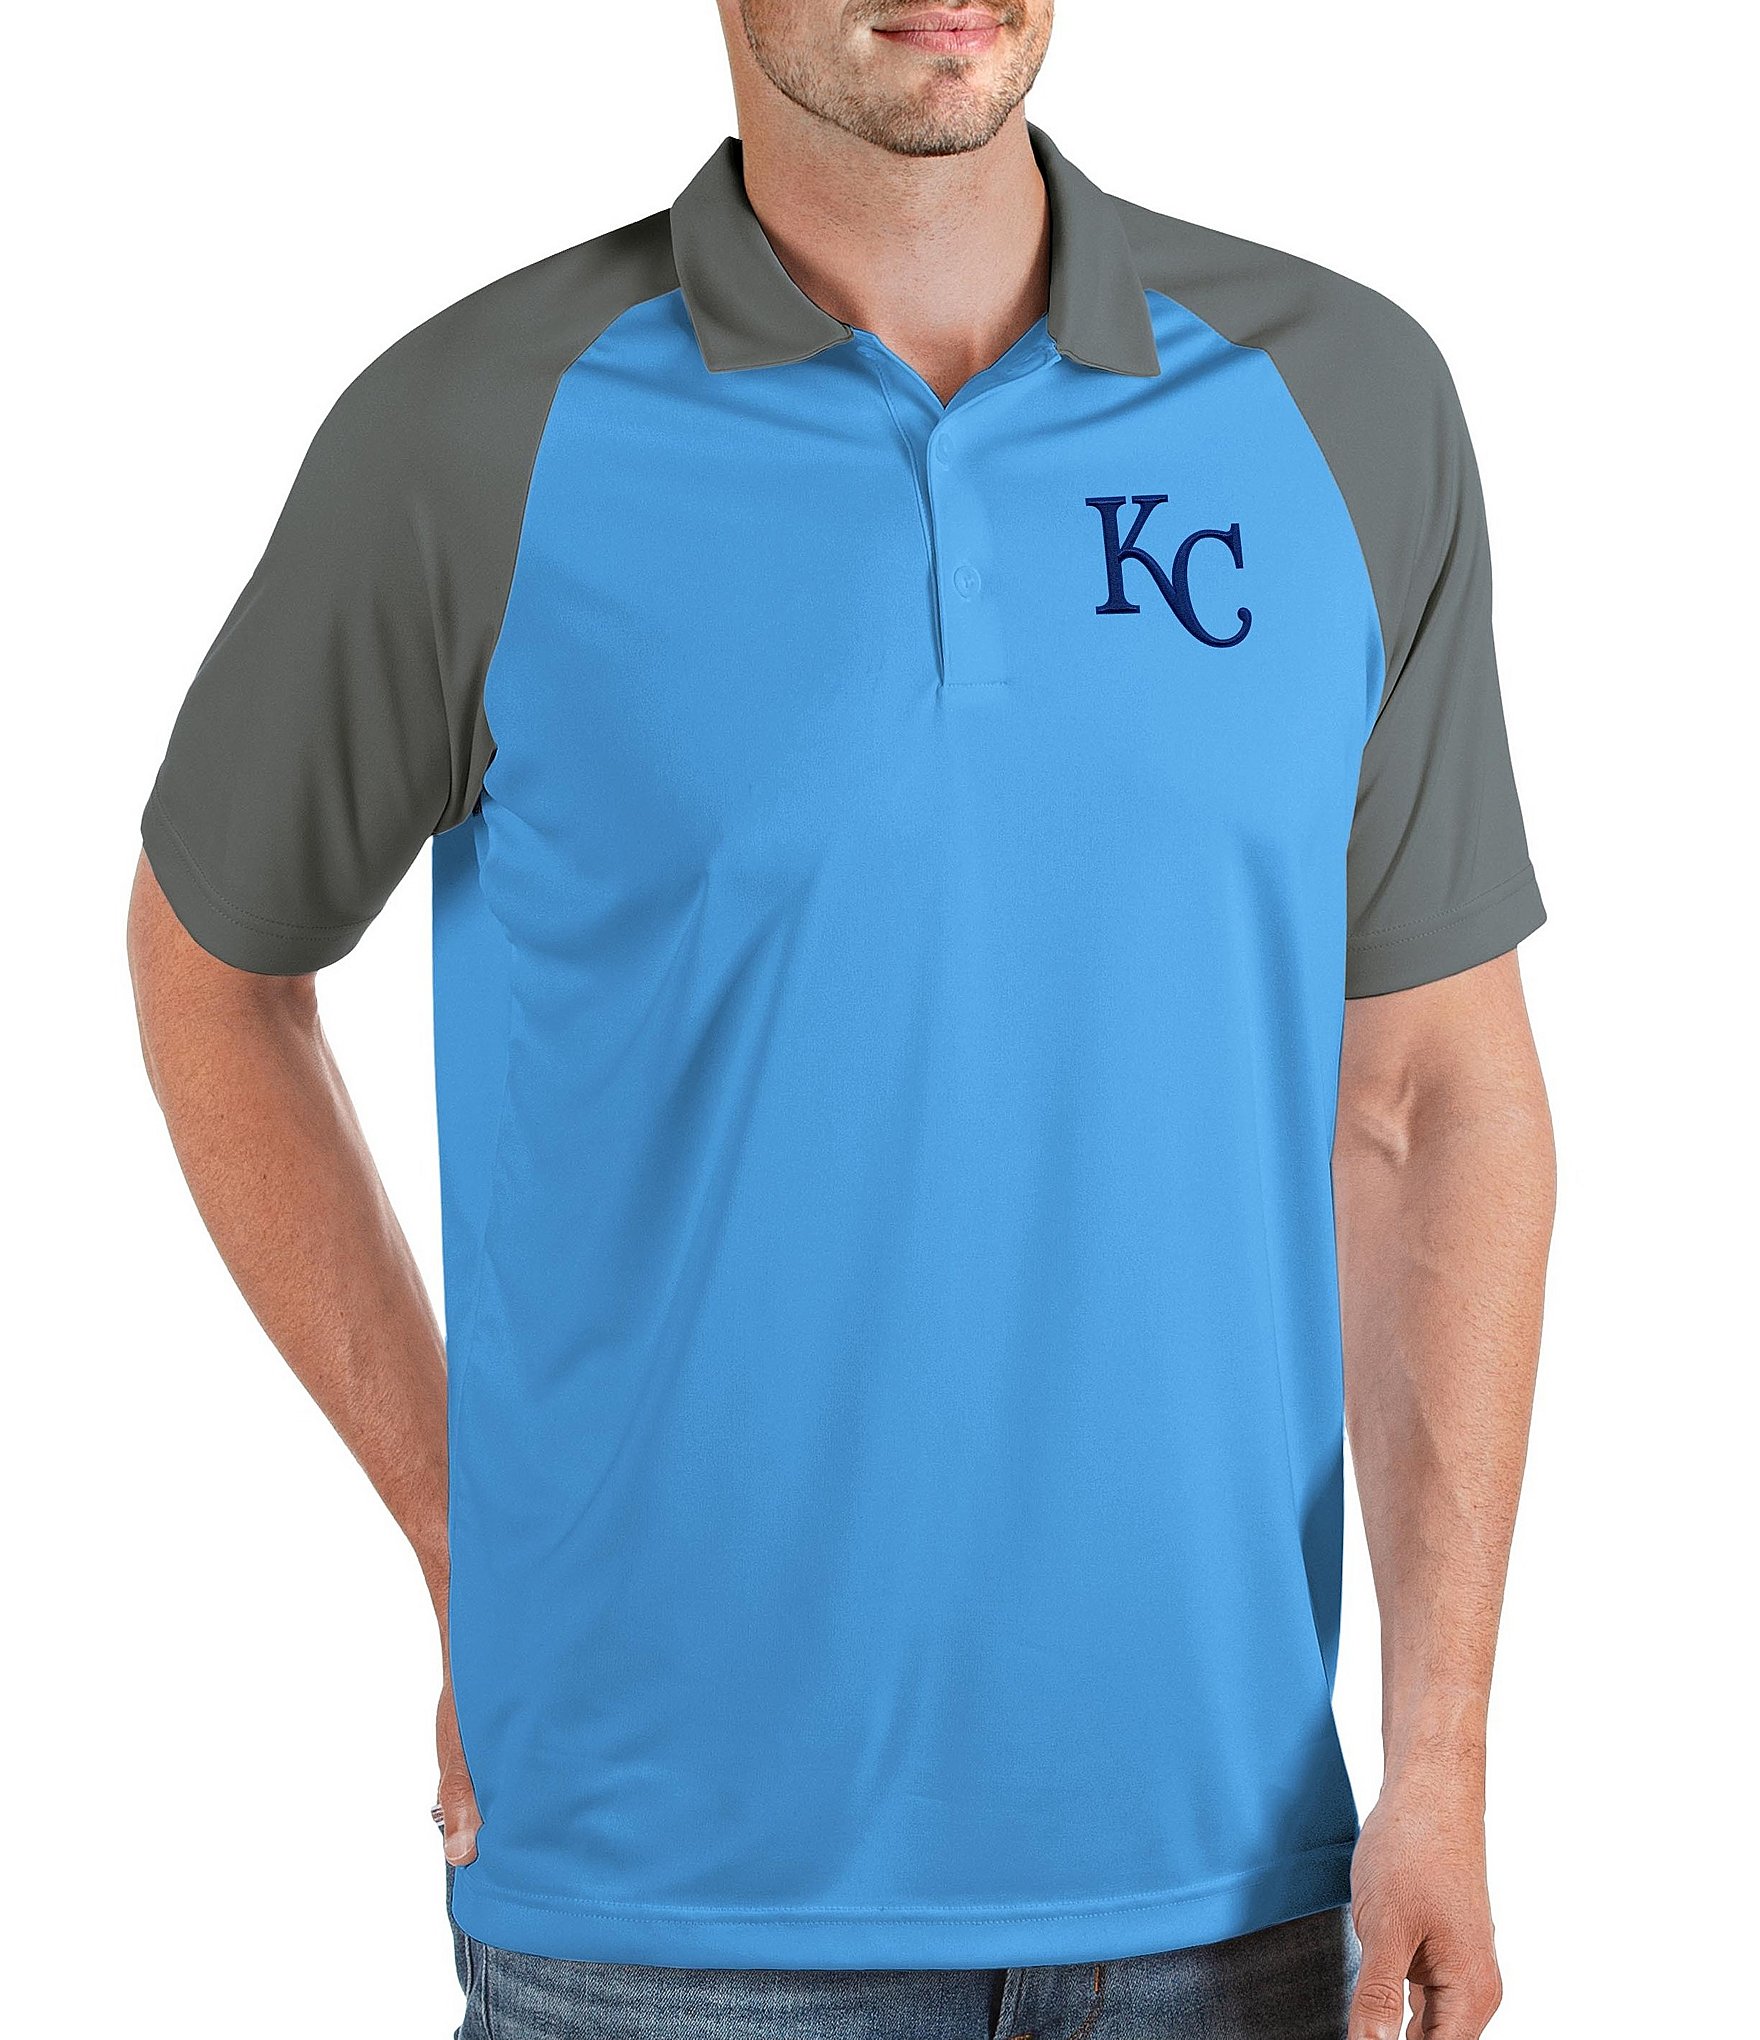 Antigua MLB Texas Rangers Nova Short-Sleeve Colorblock Polo Shirt - S